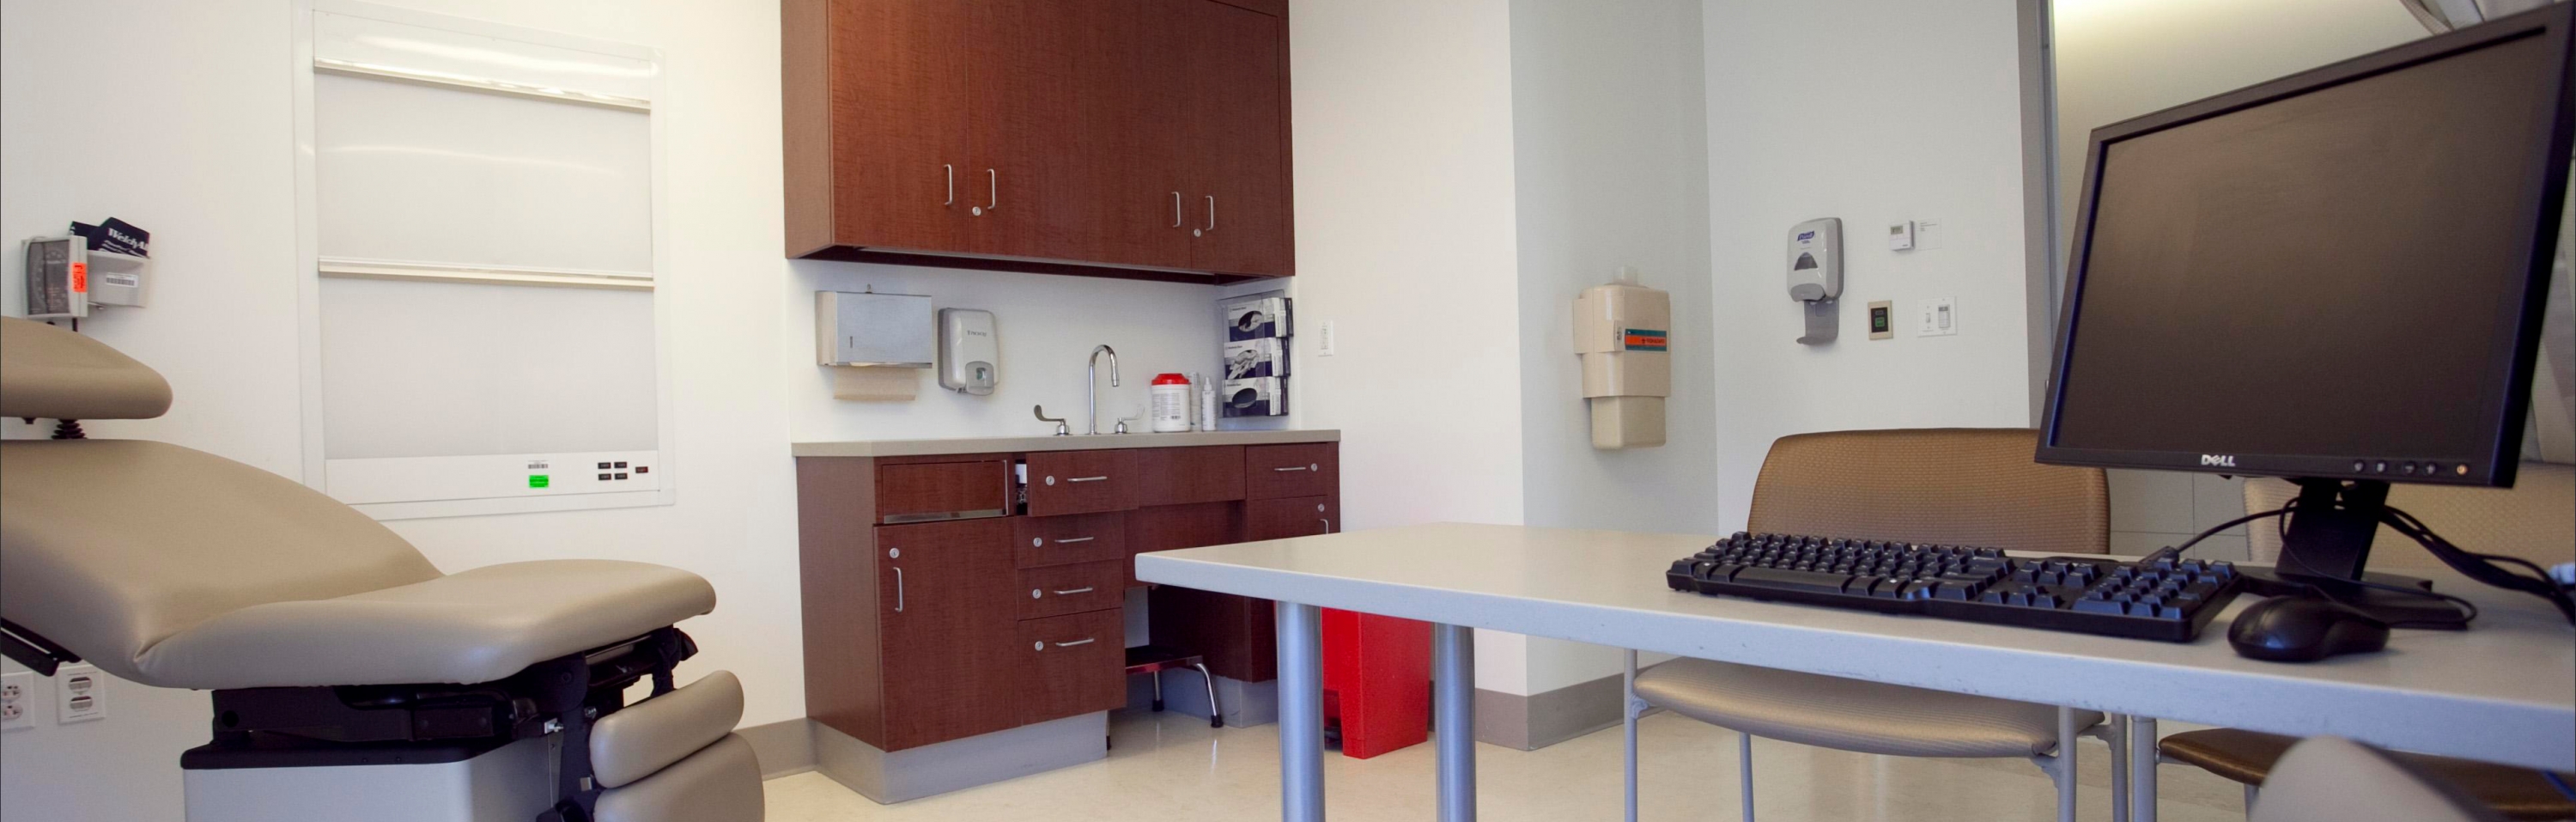 Exam room in the Kidney Transplant clinic at NewYork-Presbyterian/Weill Cornell Medical Center